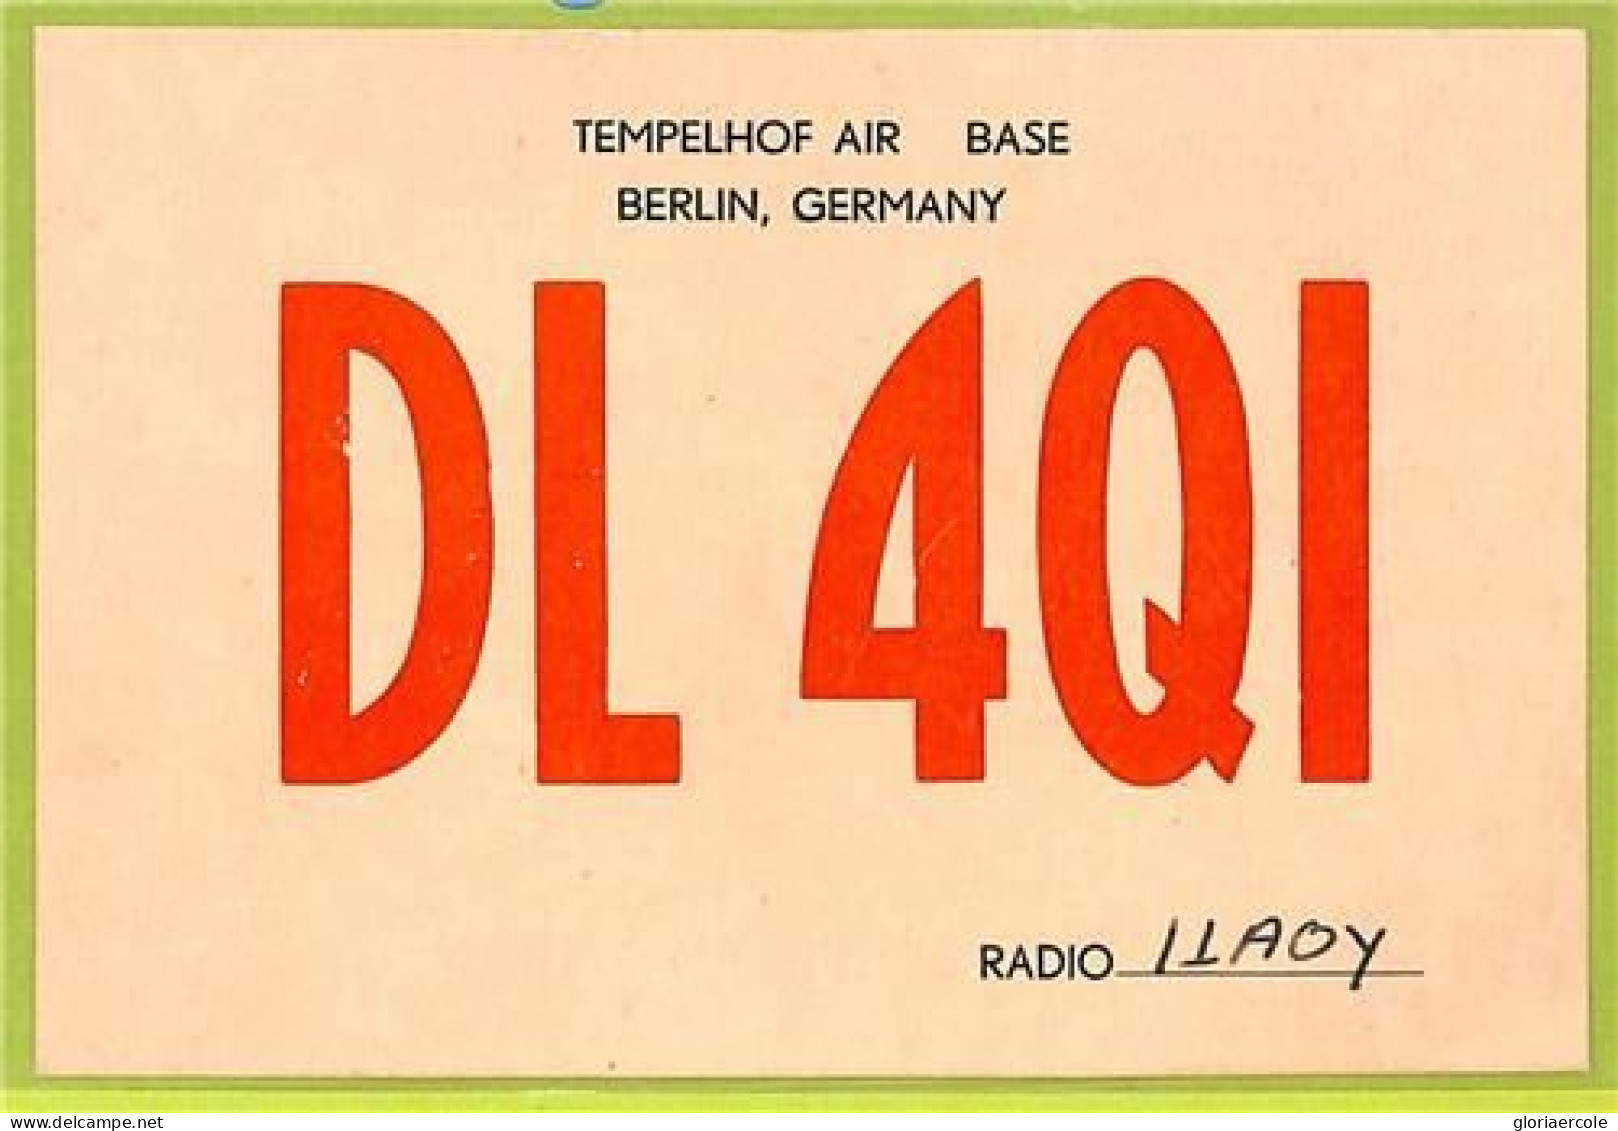 Aa9560 - GERMANY Ansichtskarten VINTAGE POSTCARD-  BERLIN Radio Frequency - Radio